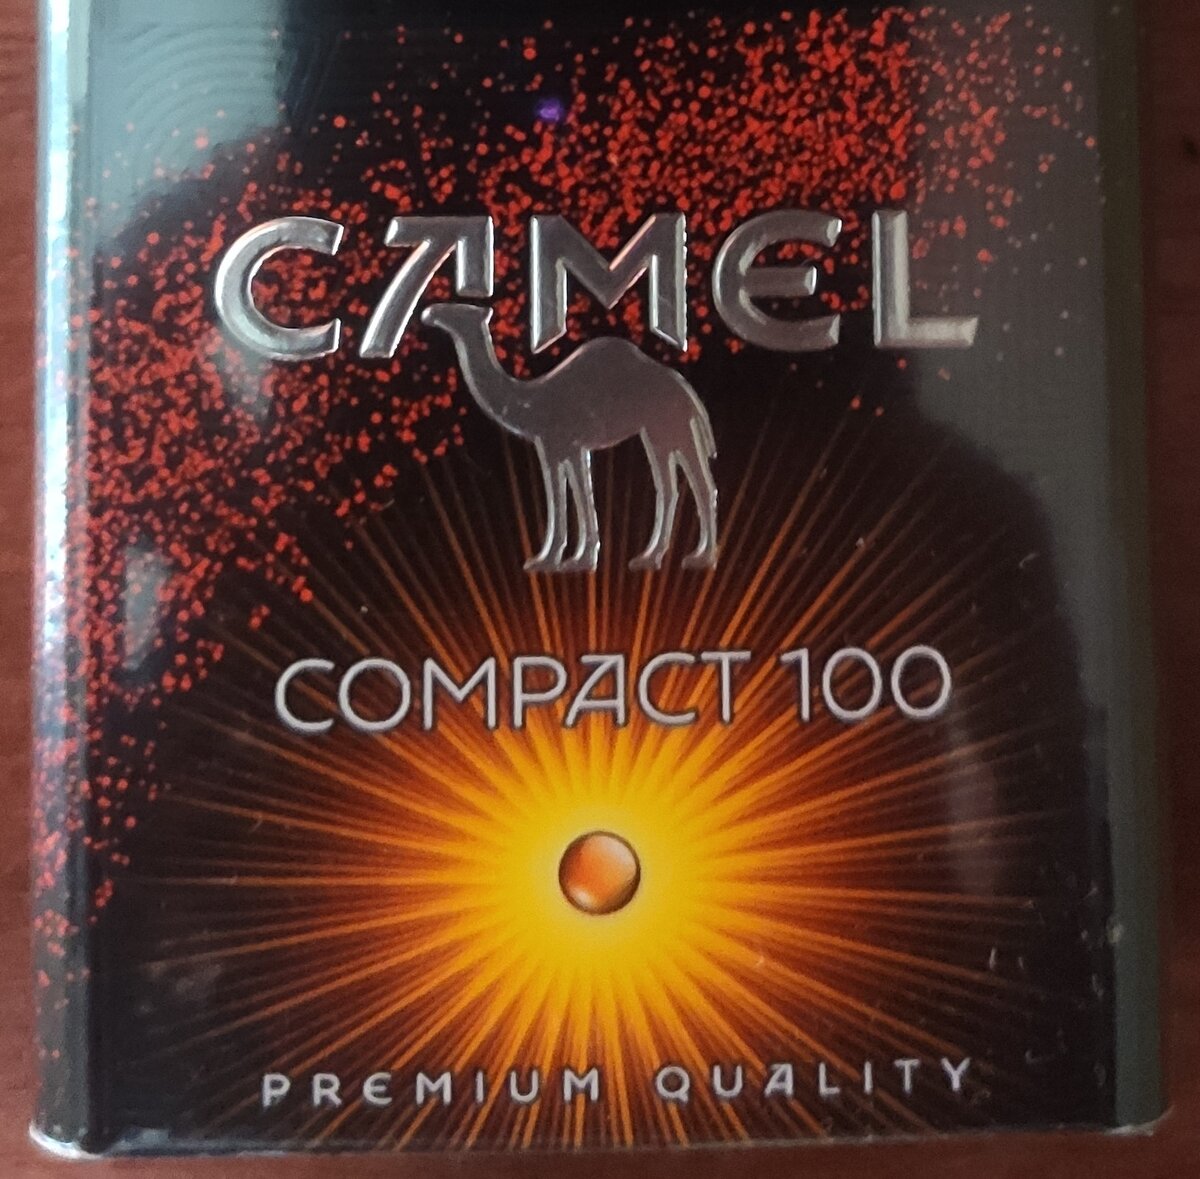 Camel какие вкусы. Camel Compact 100 Tropical Crush. Сигареты Camel Compact 100 Tropical Crush. Кэмел 100 компакт Тропикал. Кэмел 100 Тропикал краш сигареты.